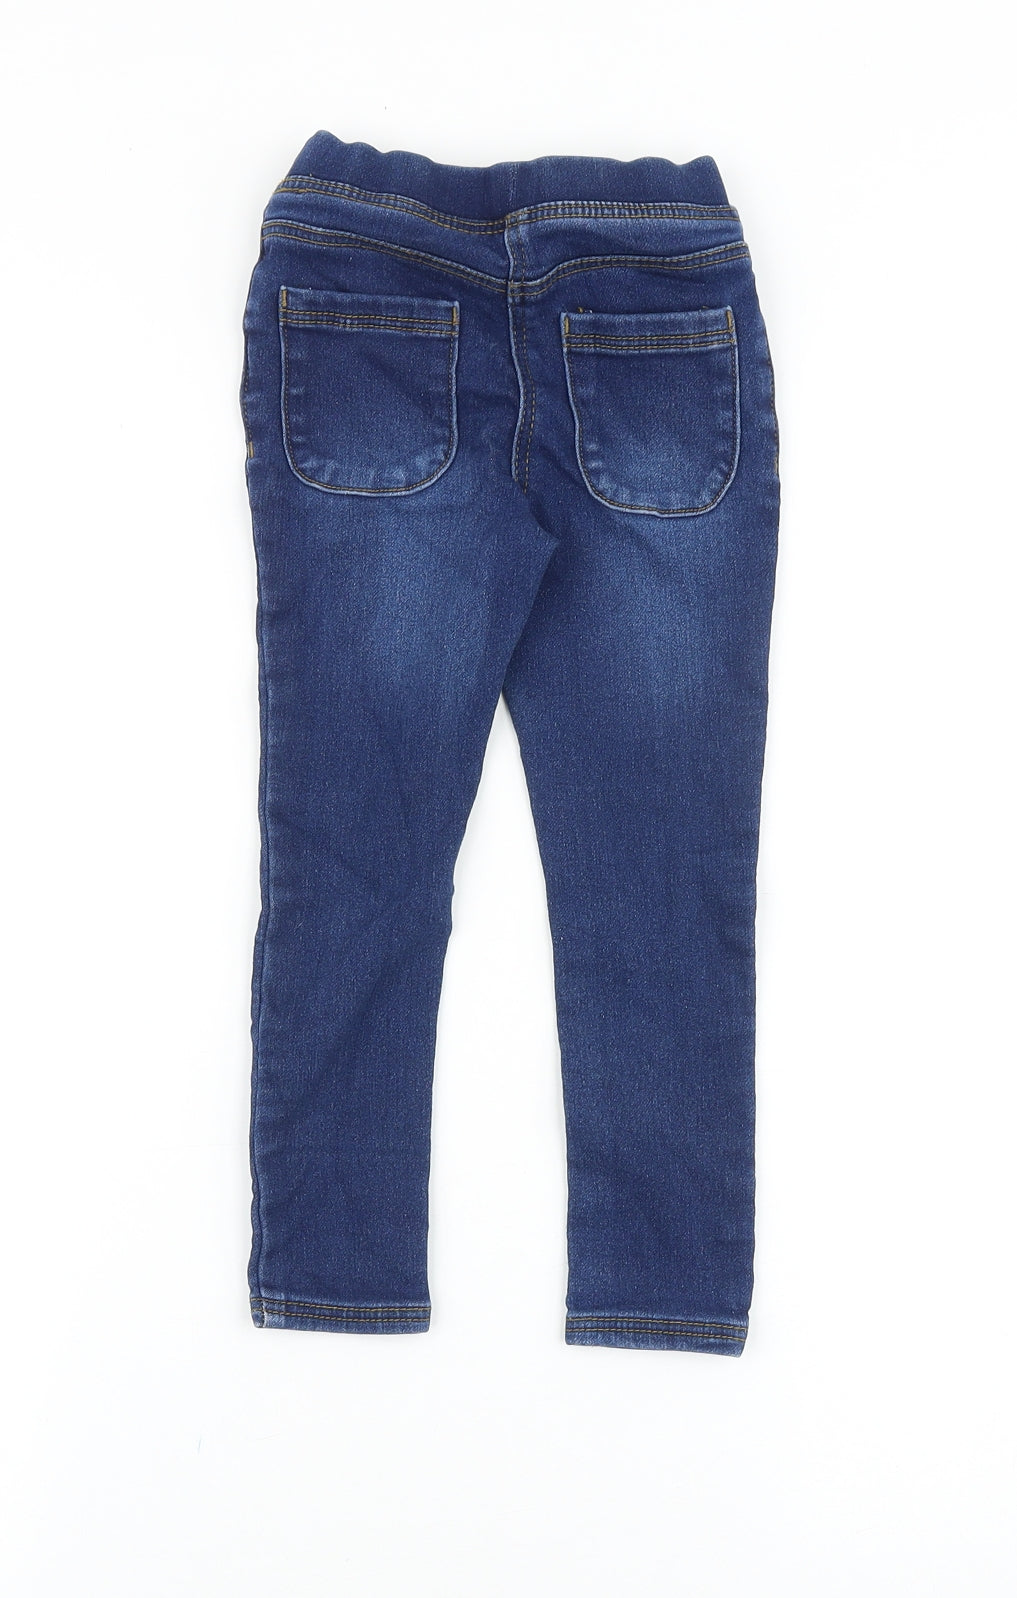 Nutmeg Girls Blue Cotton Skinny Jeans Size 2-3 Years Regular Pullover